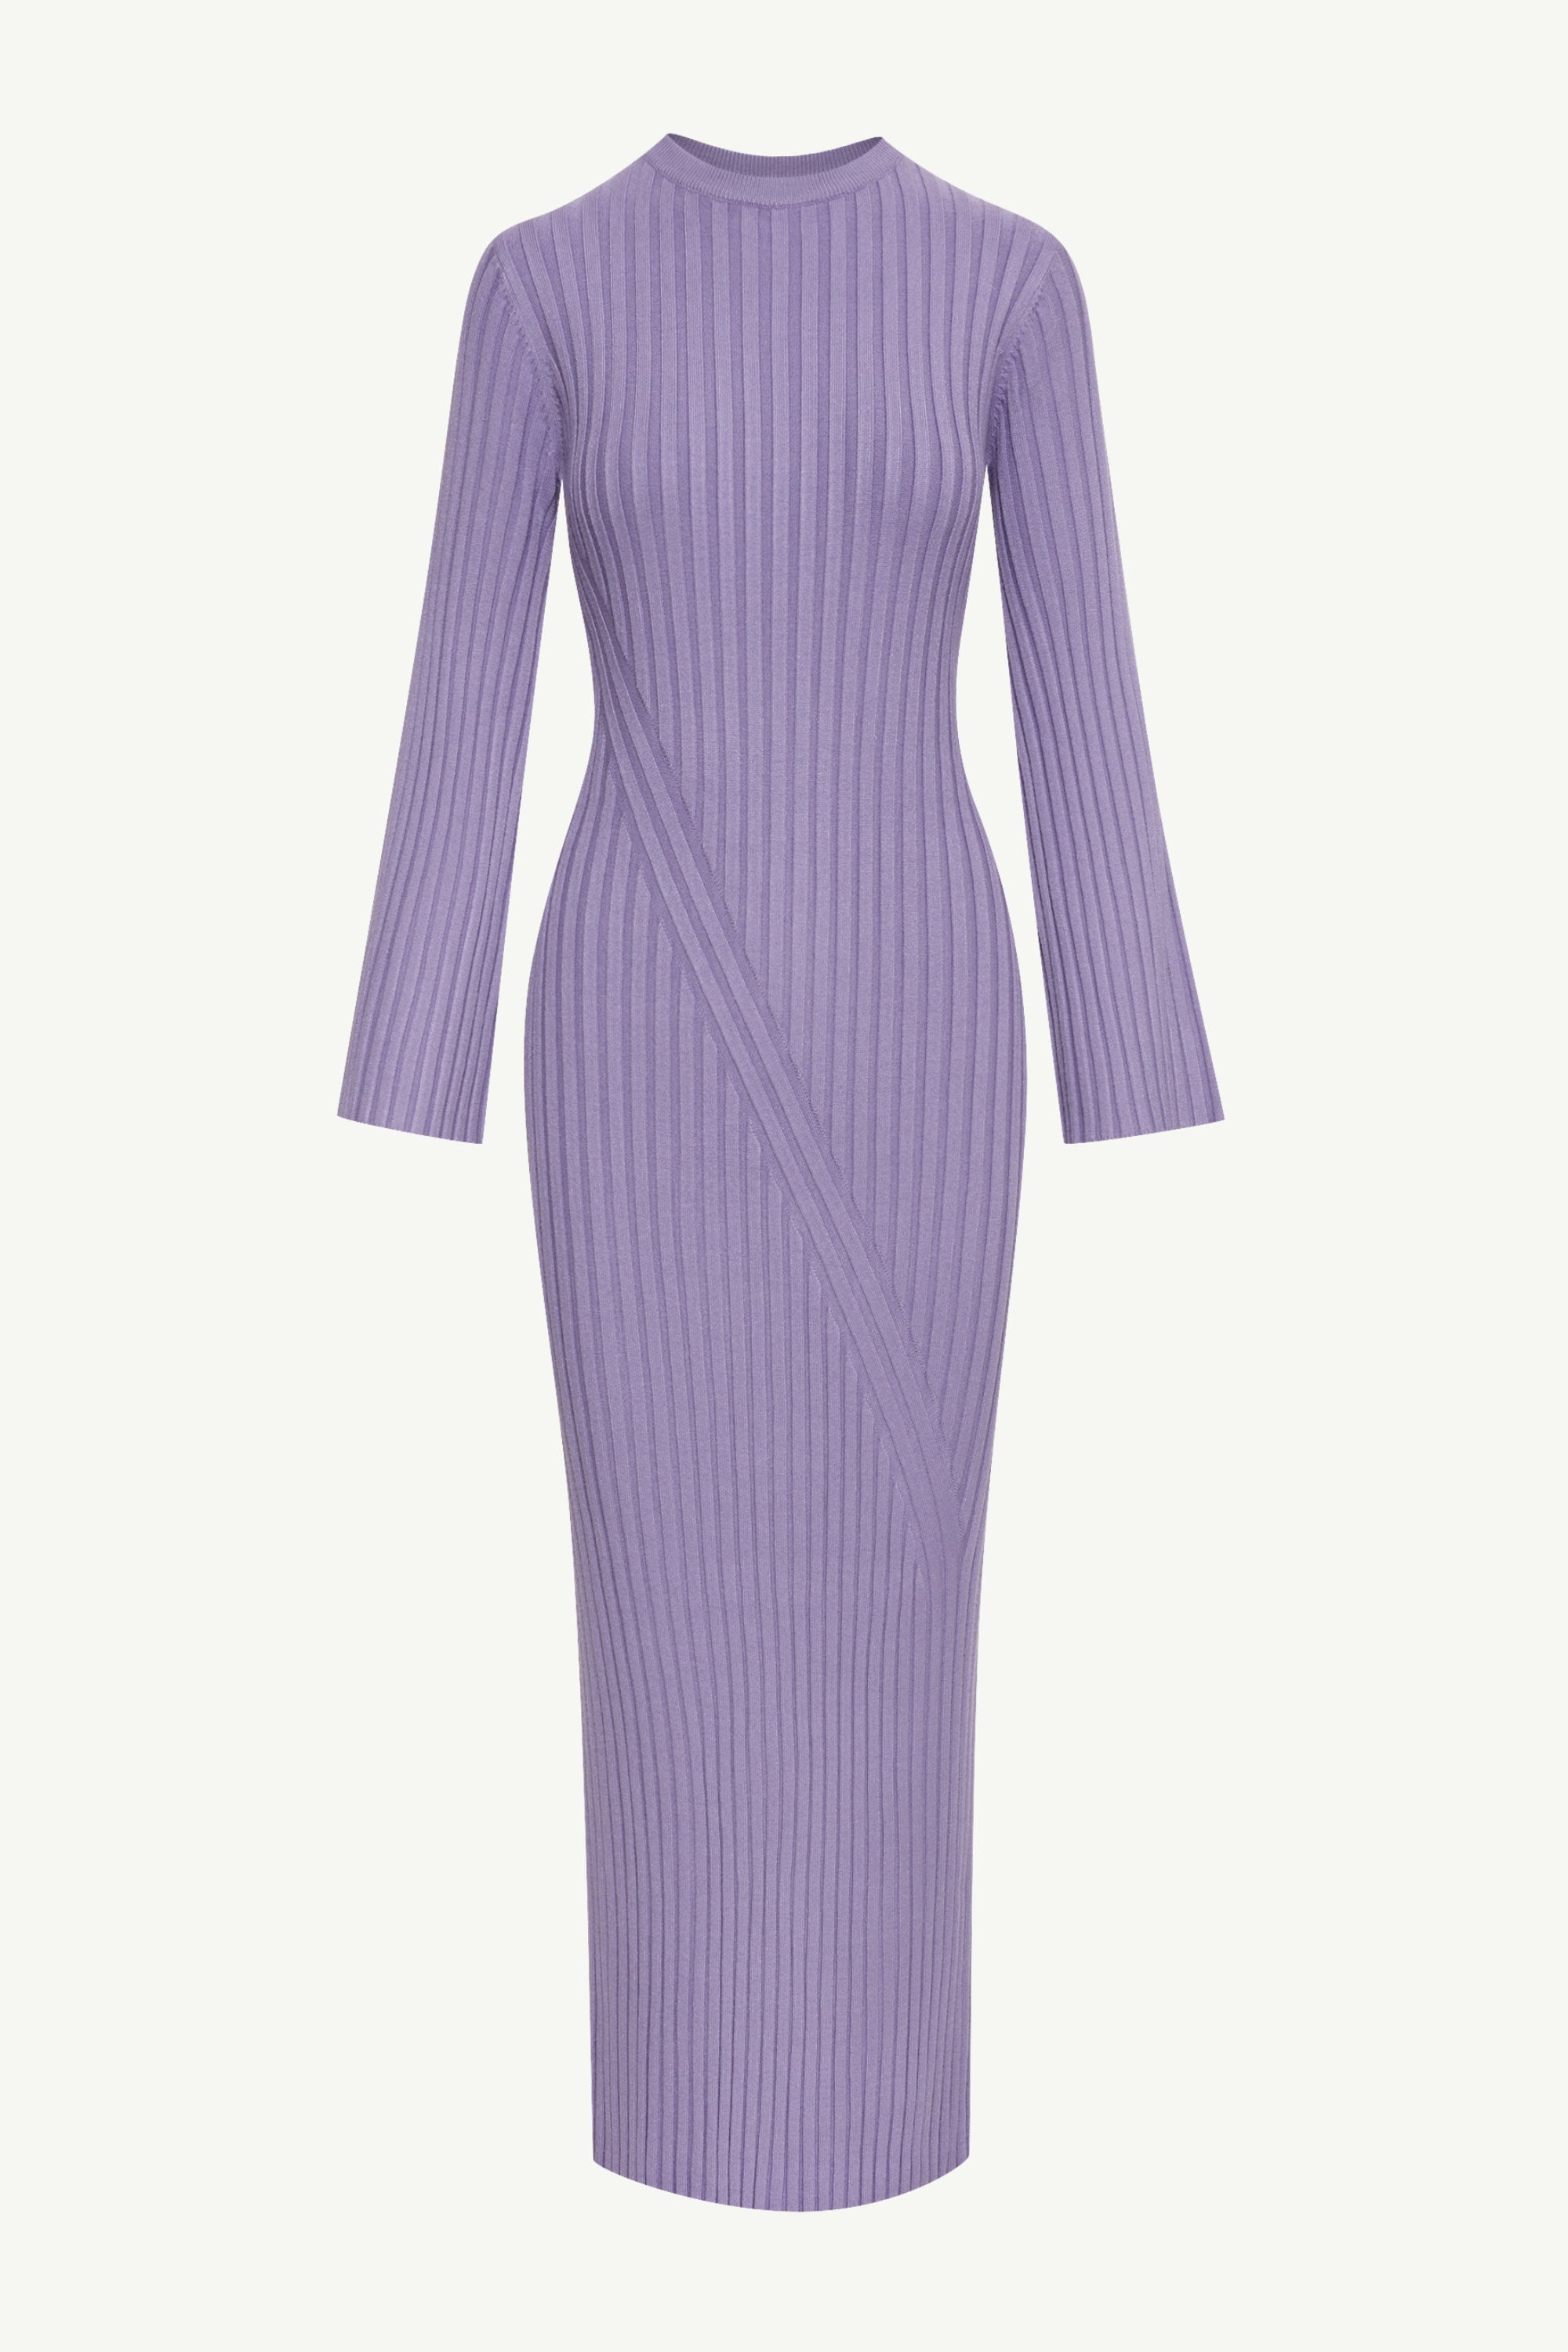 Melanie Ribbed Knit Maxi Dress - Lavender Clothing saigonodysseyhotel 